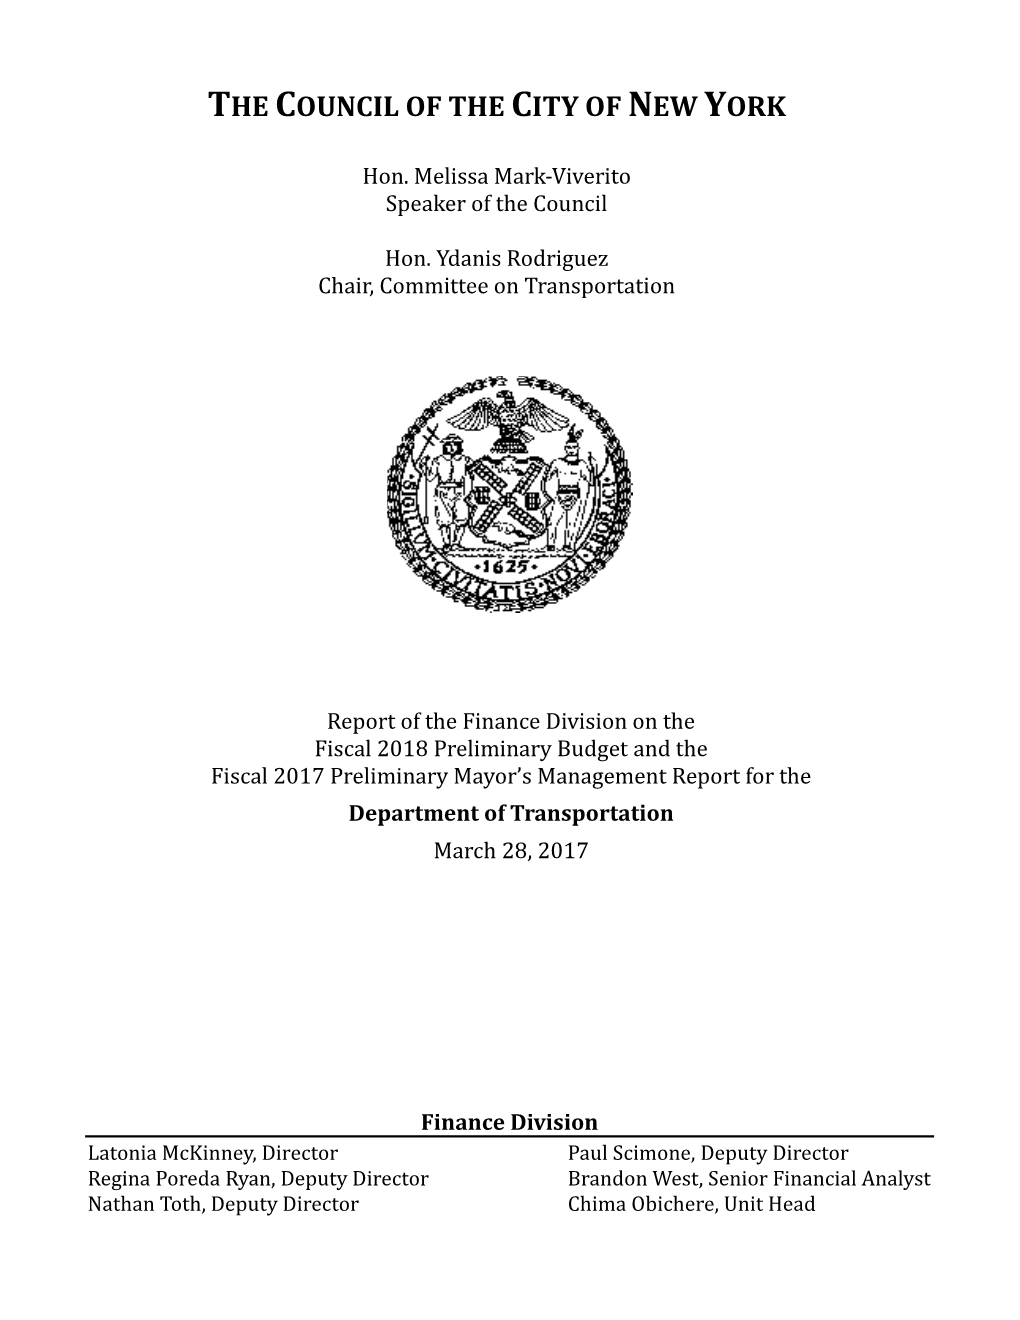 Department of Transportation (PDF)